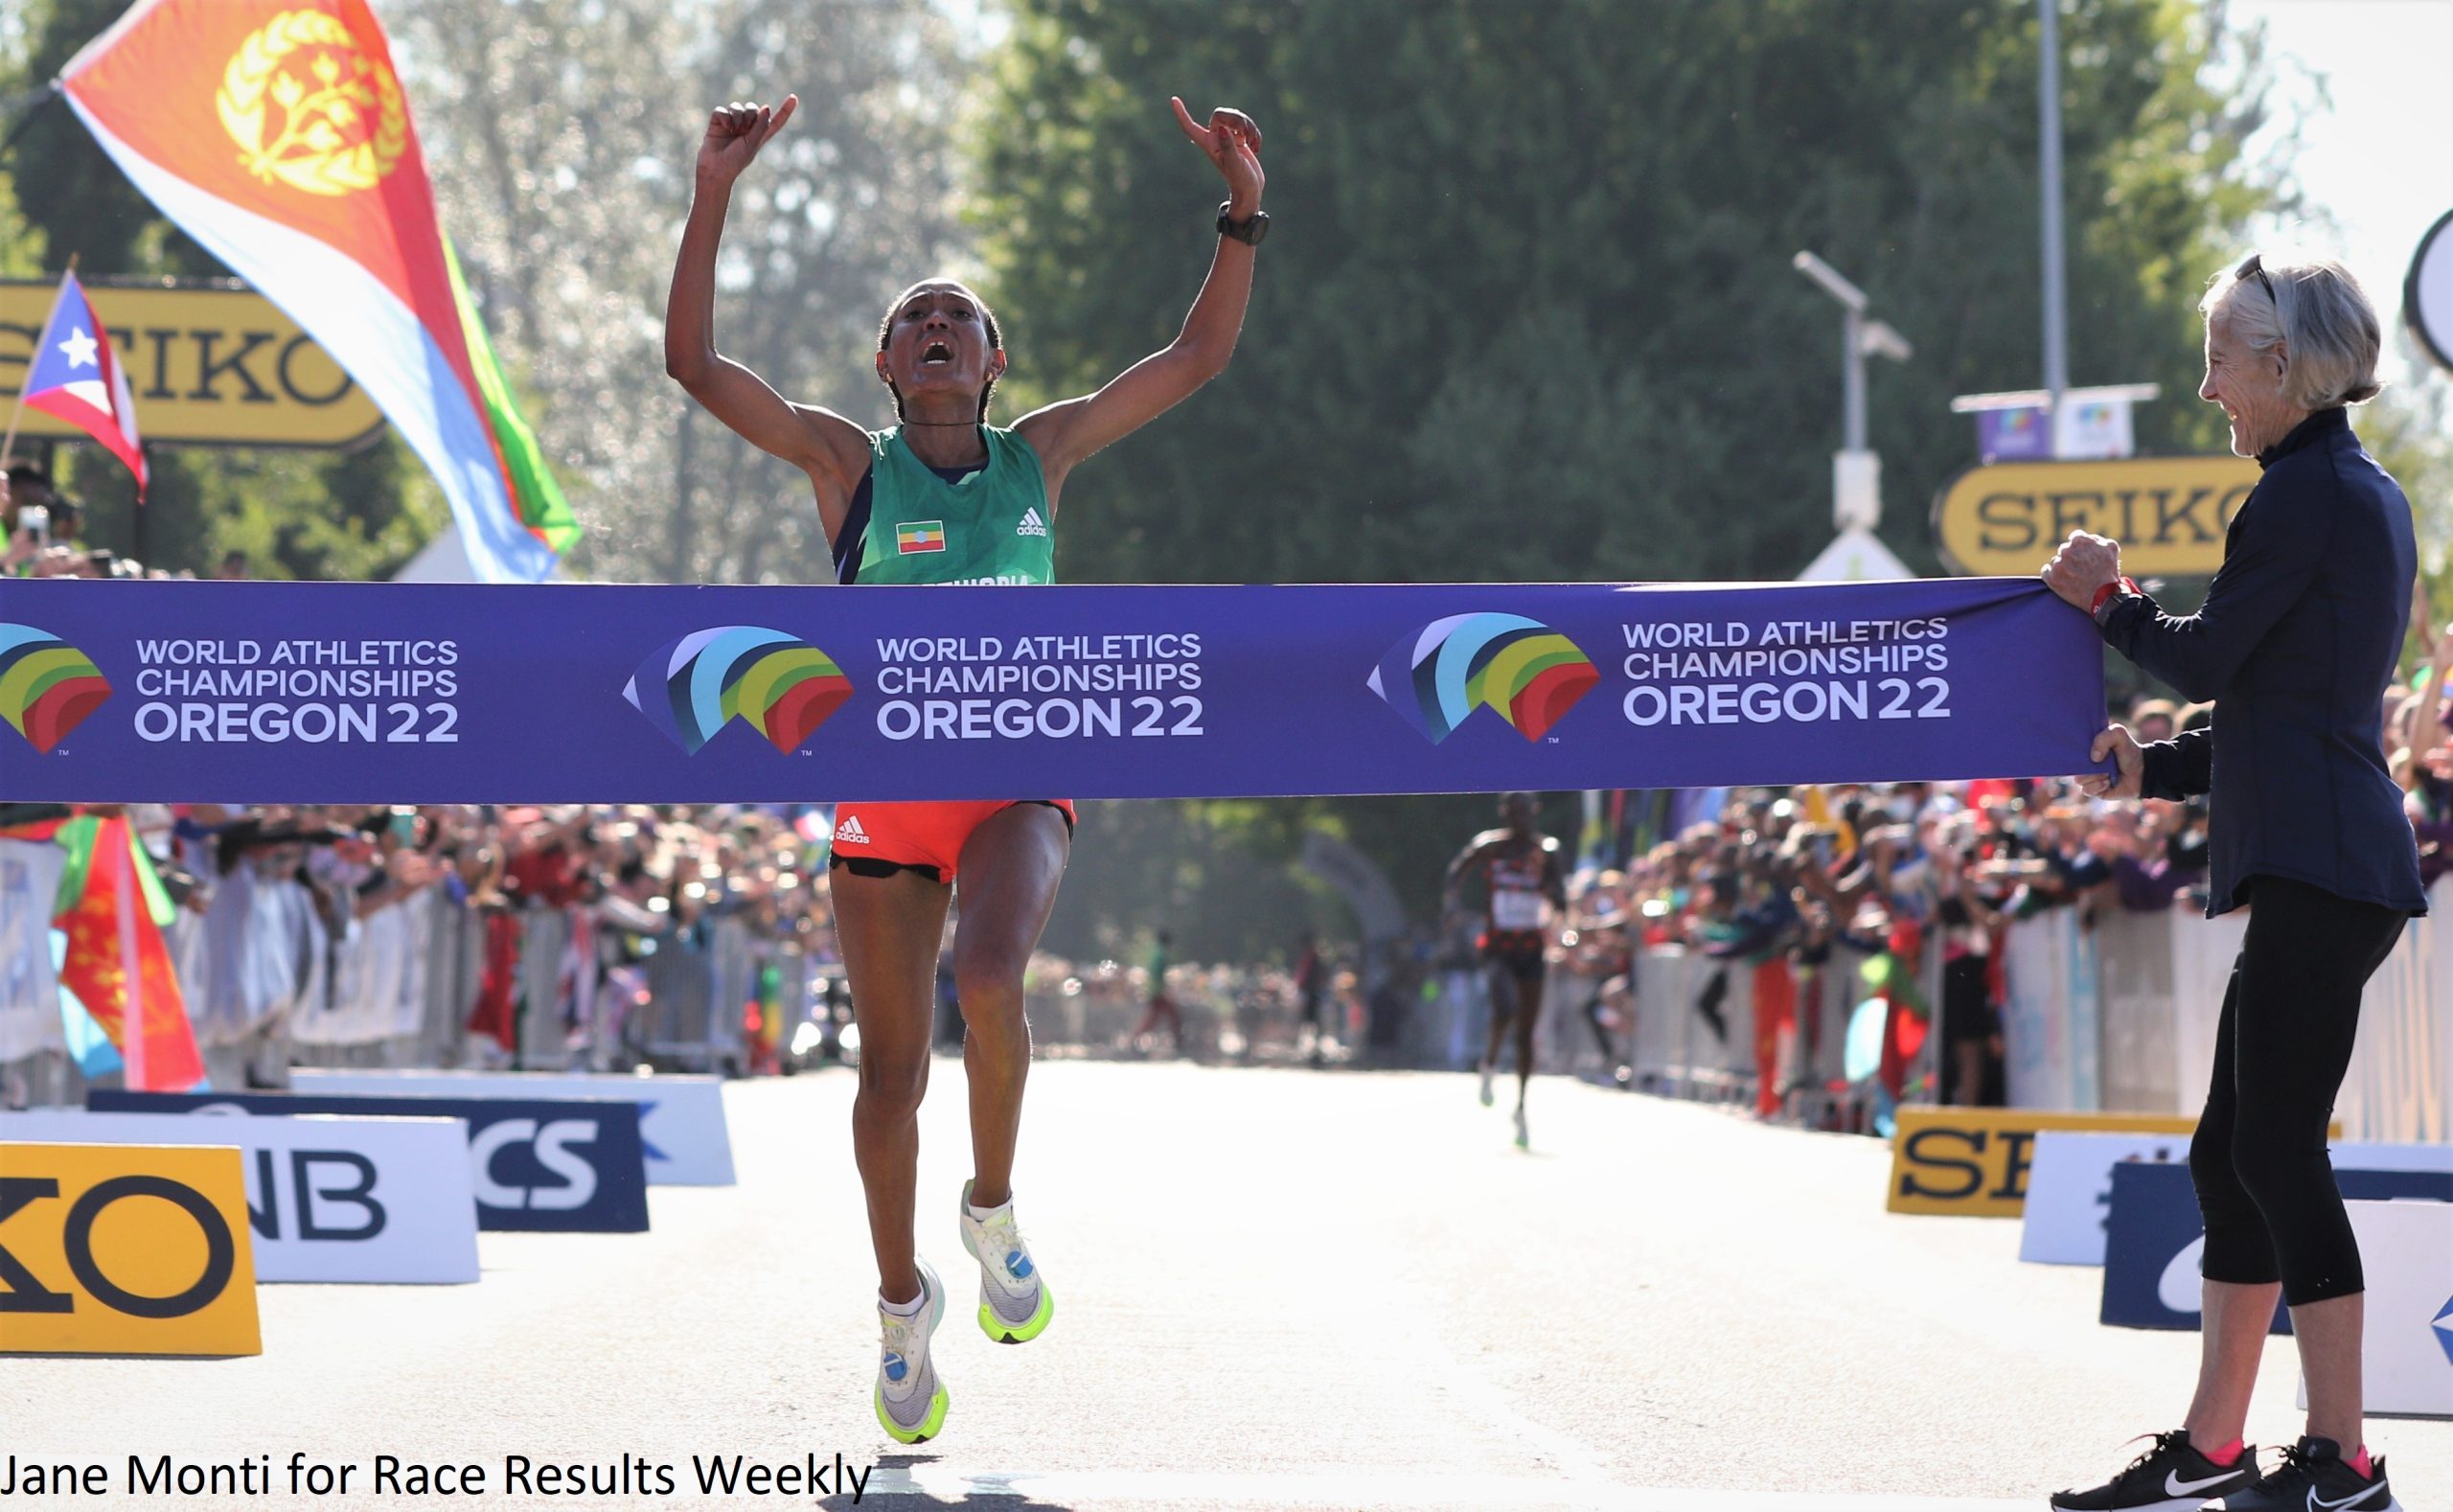 Gotytom Gebreslase wins marathon at Oregon22